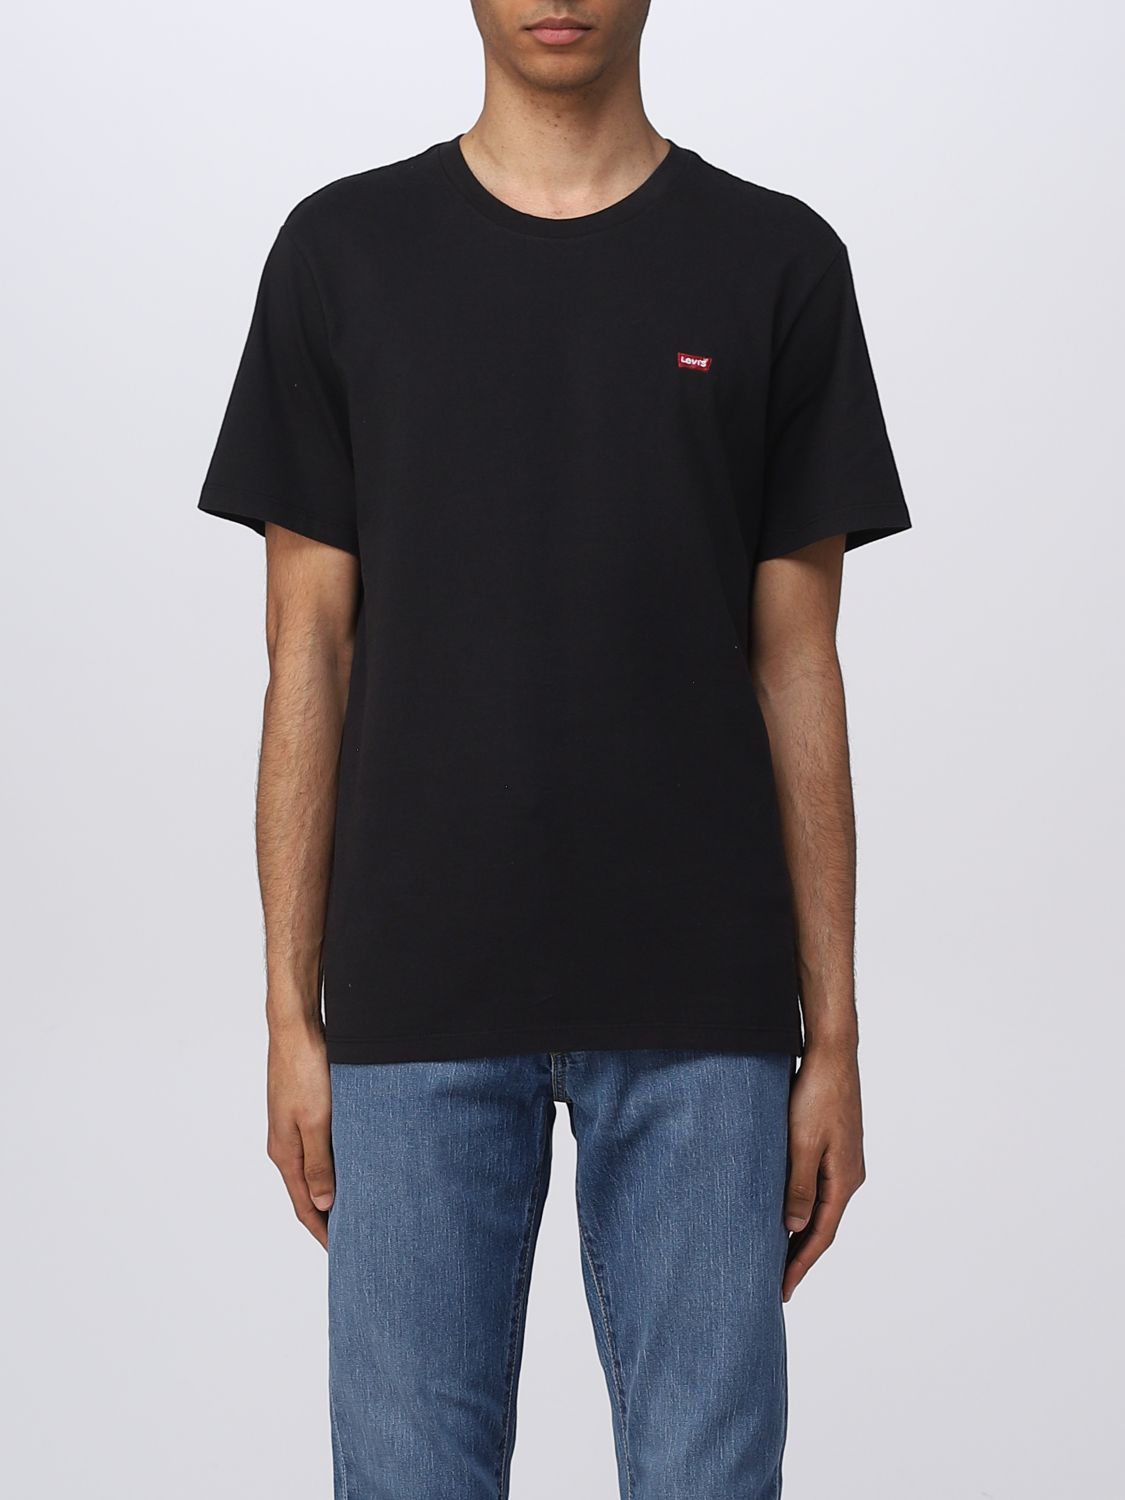 LEVI'S: t-shirt for man - Black | Levi's t-shirt 566050009 online on ...